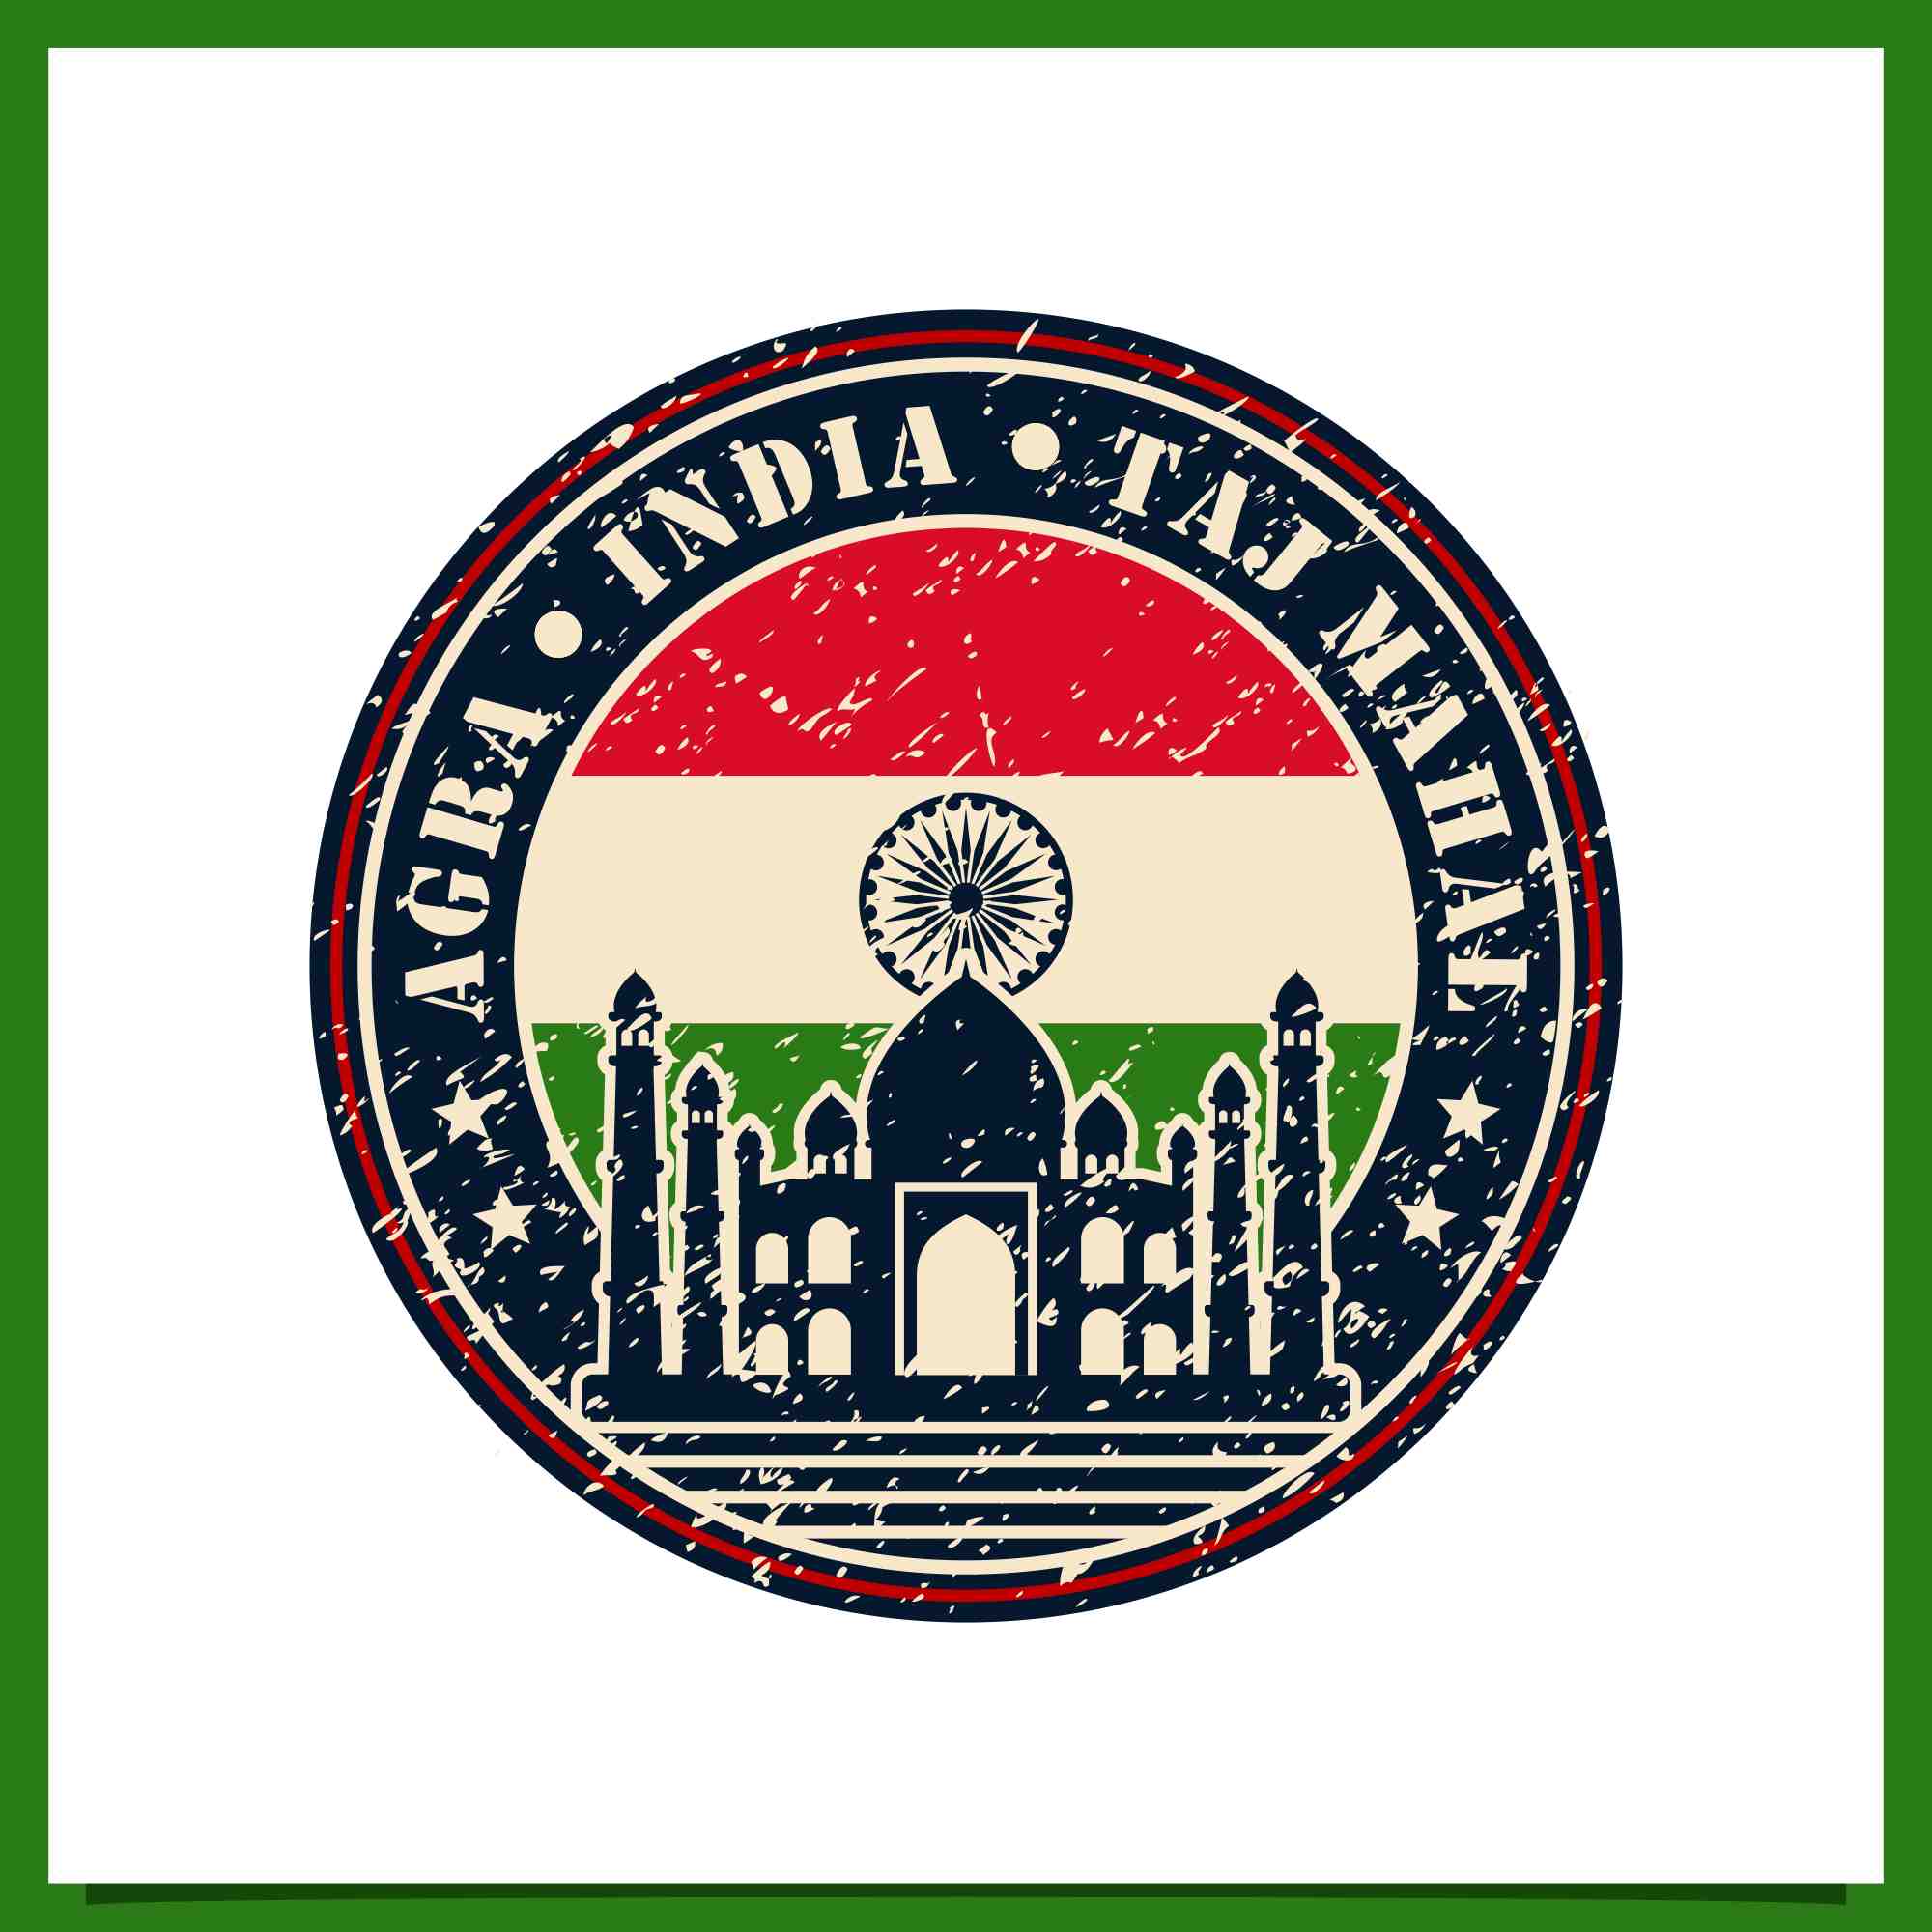 Agra India Tajmahal logo design - $ 4 preview image.